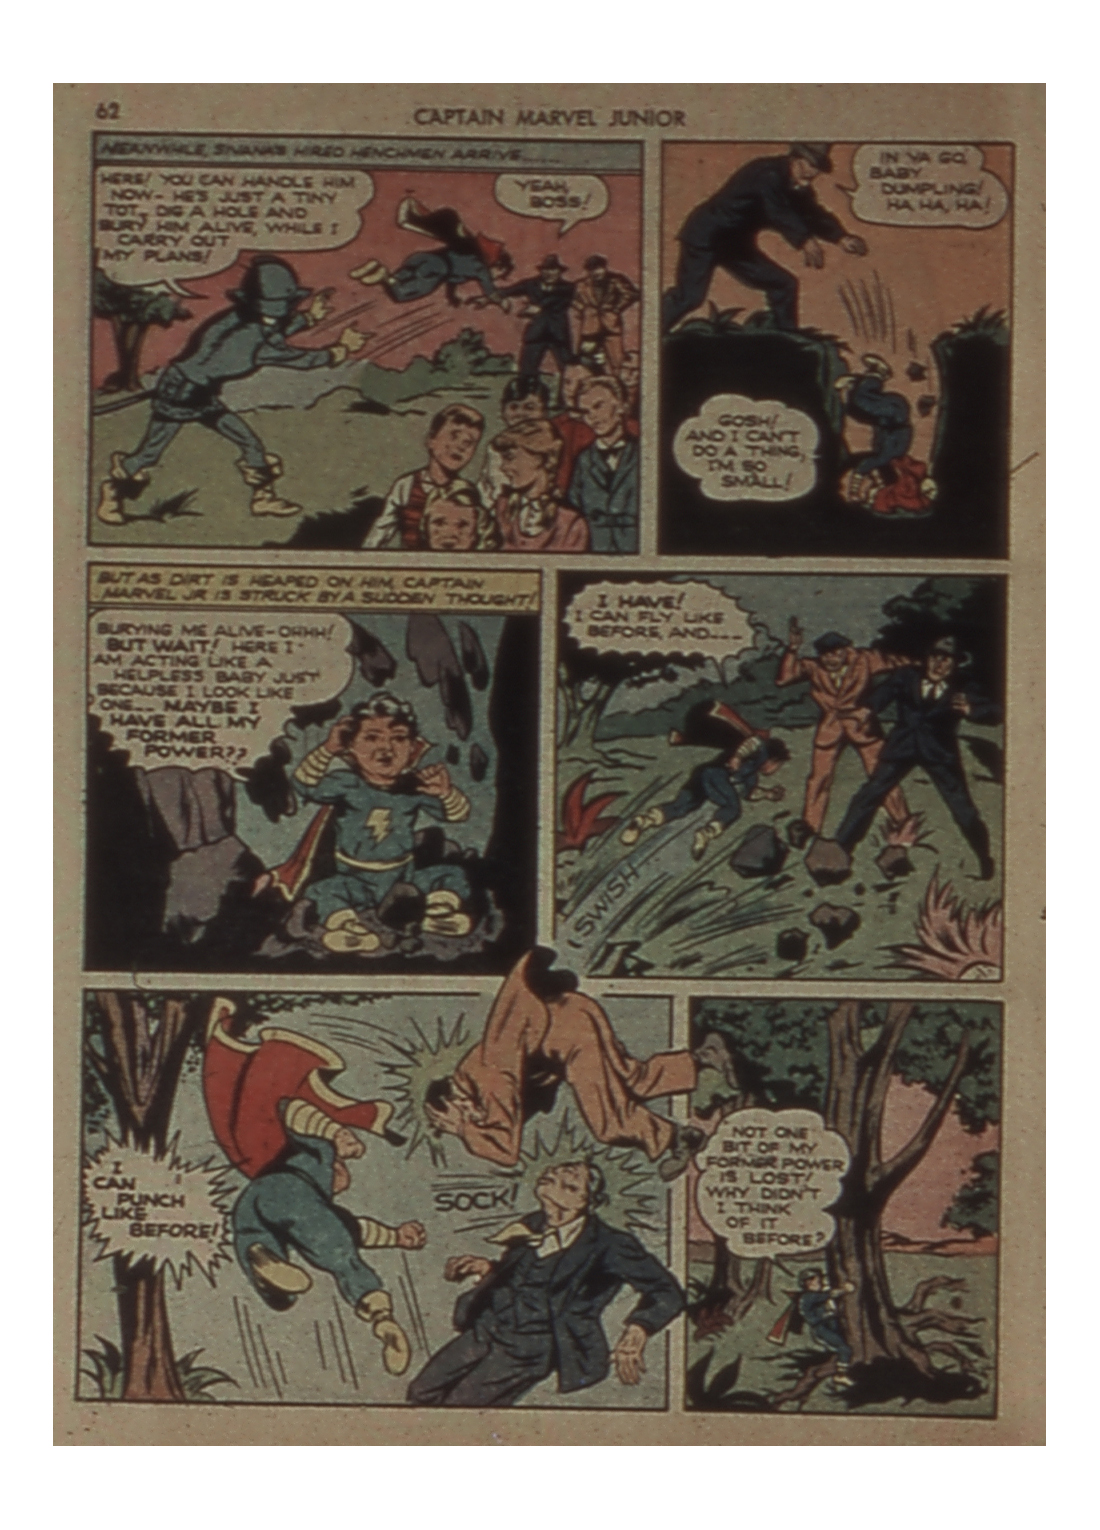 Read online Captain Marvel, Jr. comic -  Issue #5 - 62